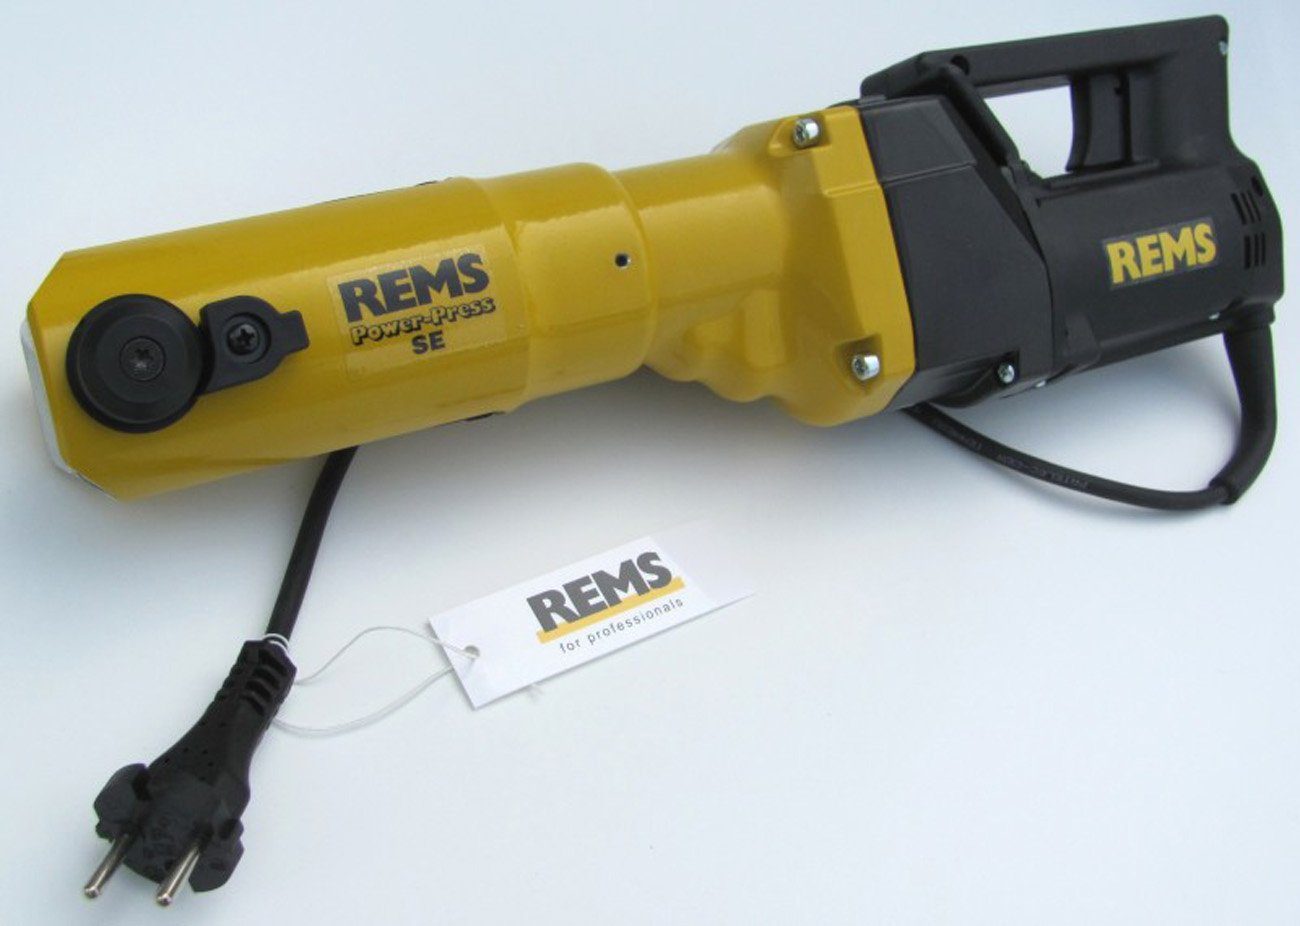 572101 REMS Rems Werkstattpresse Pressmaschine Presszange SE Power … Sanitär Press Nr.